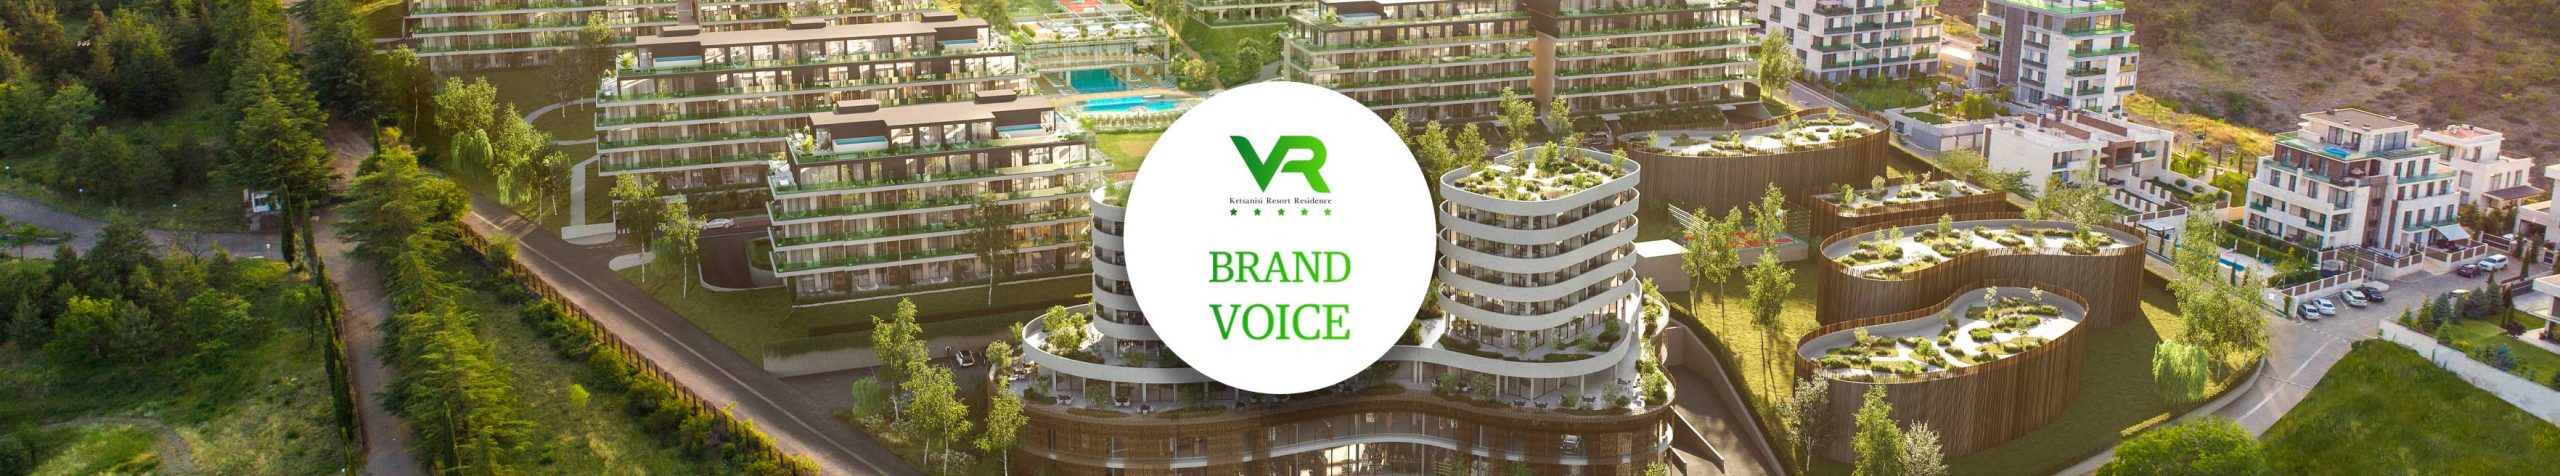 Brand-Voice1